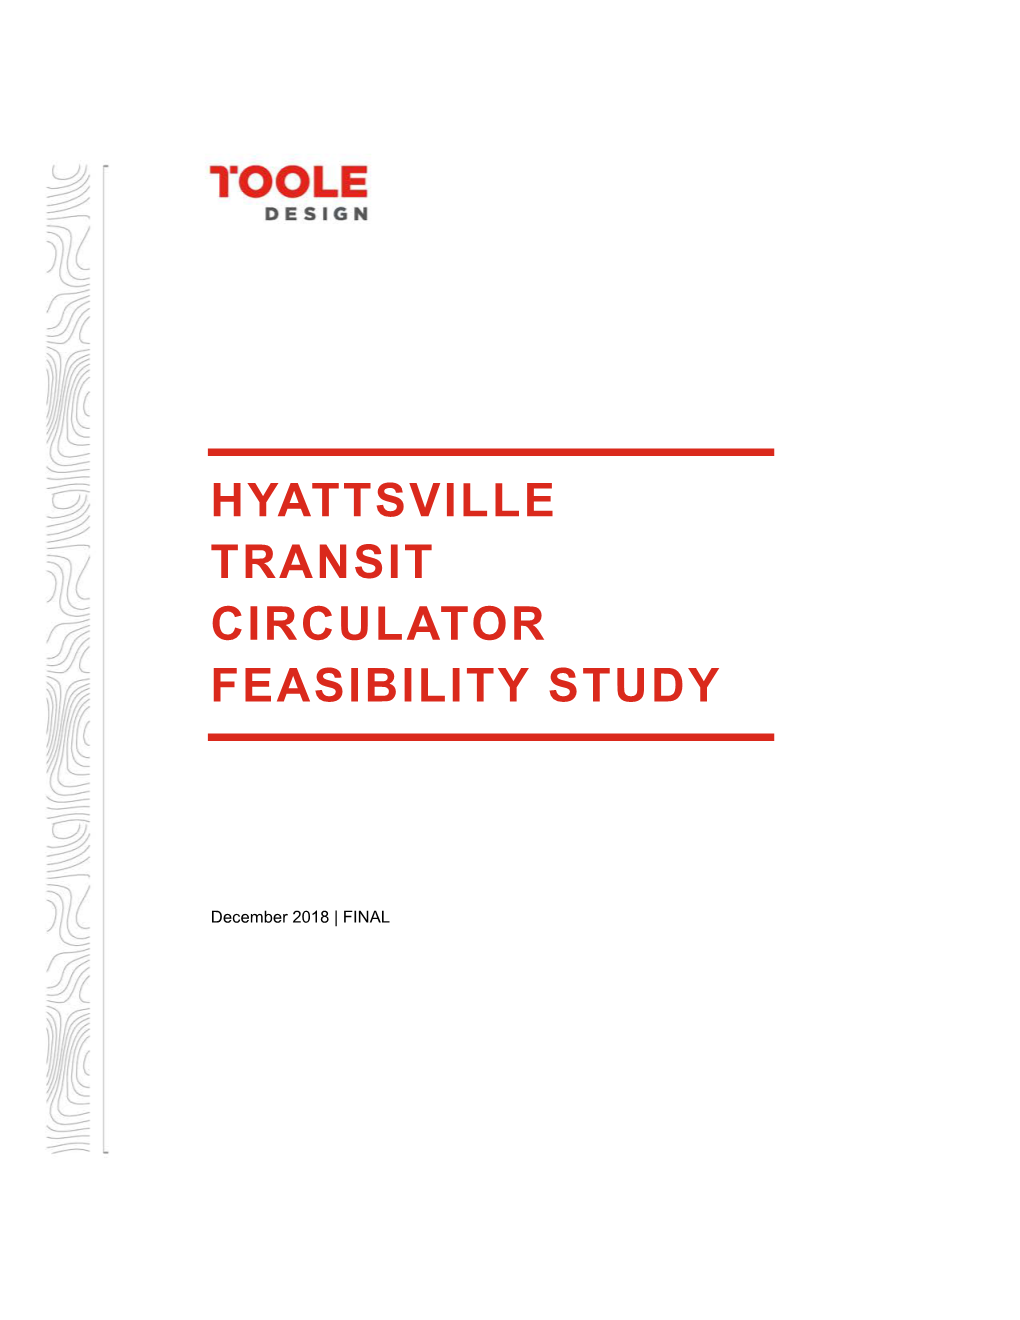 Hyattsville Transit Circulator Feasibility Study